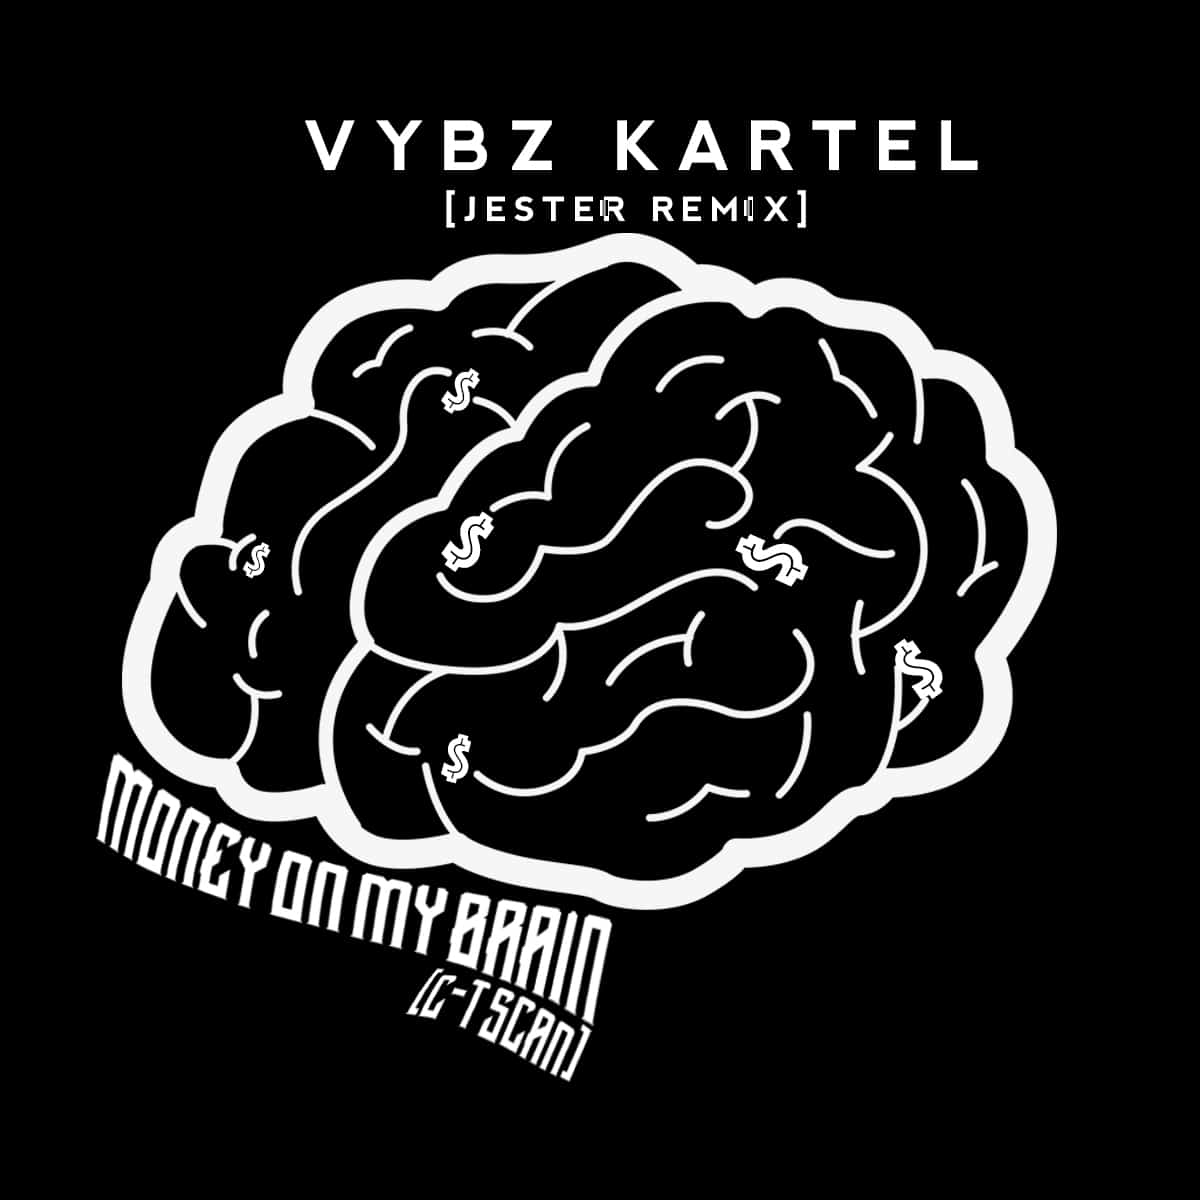 Vybz Kartel - Money On My Brain (C-T Scan) (Jester Remix)